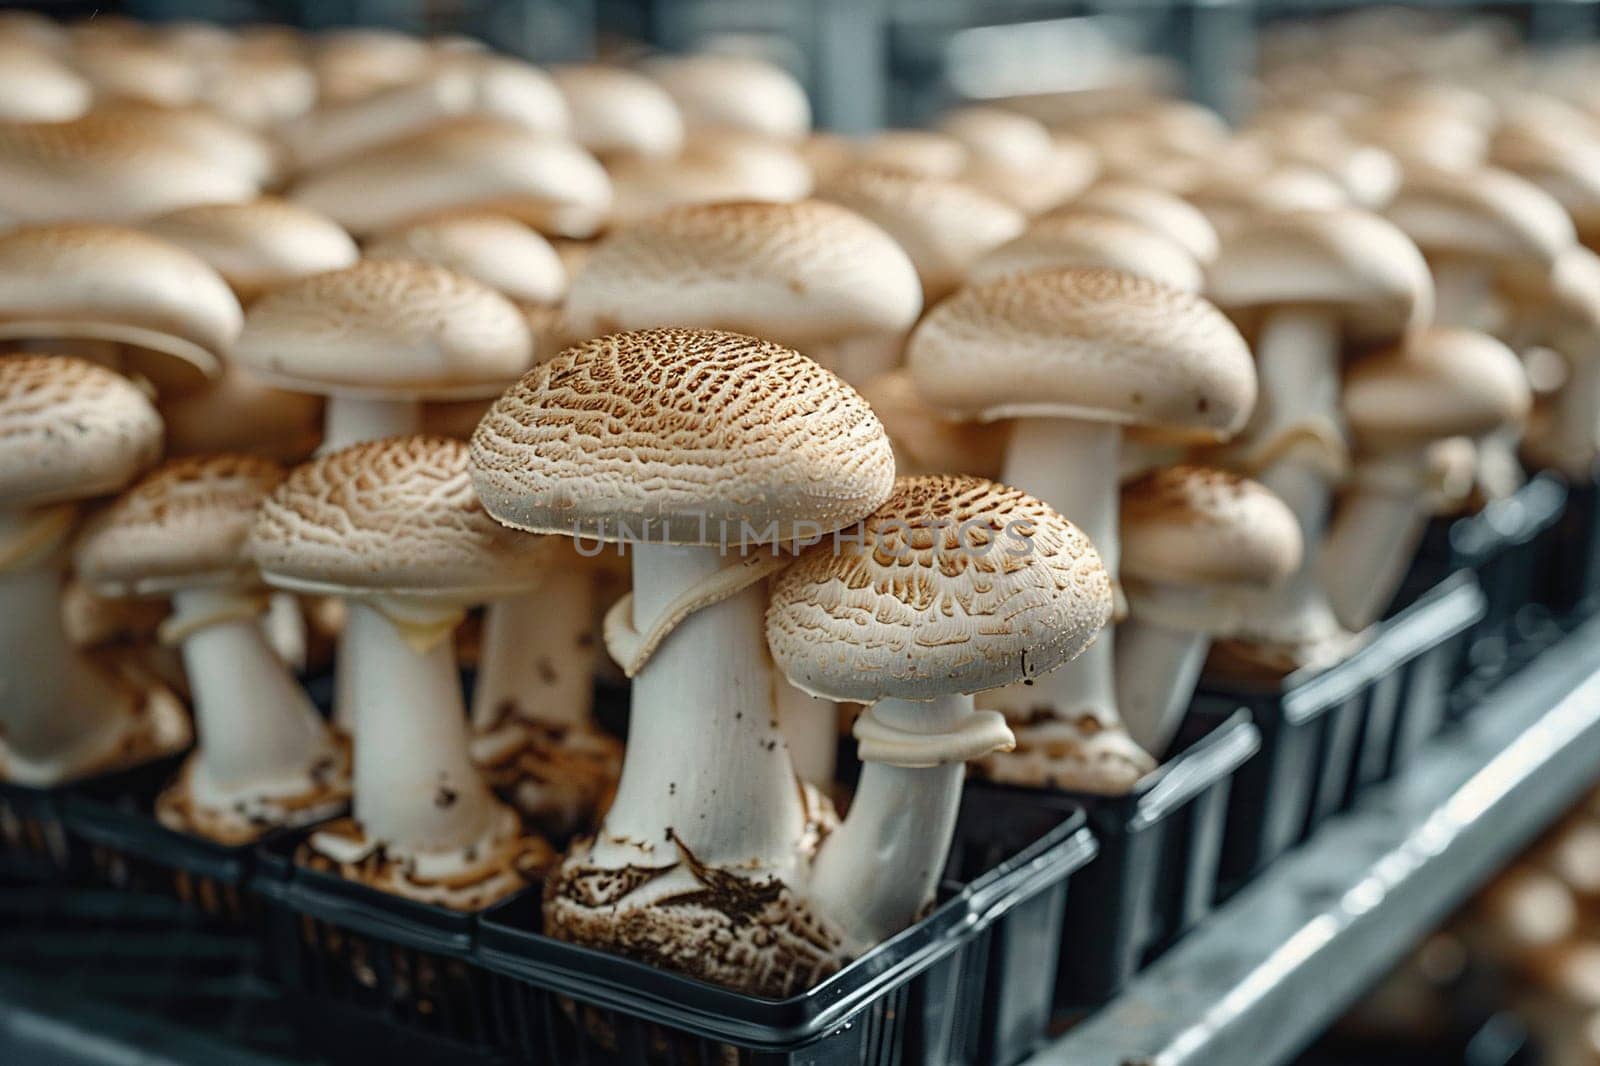 Champignons grow in boxes on a mushroom farm. Mushroom growing industry.